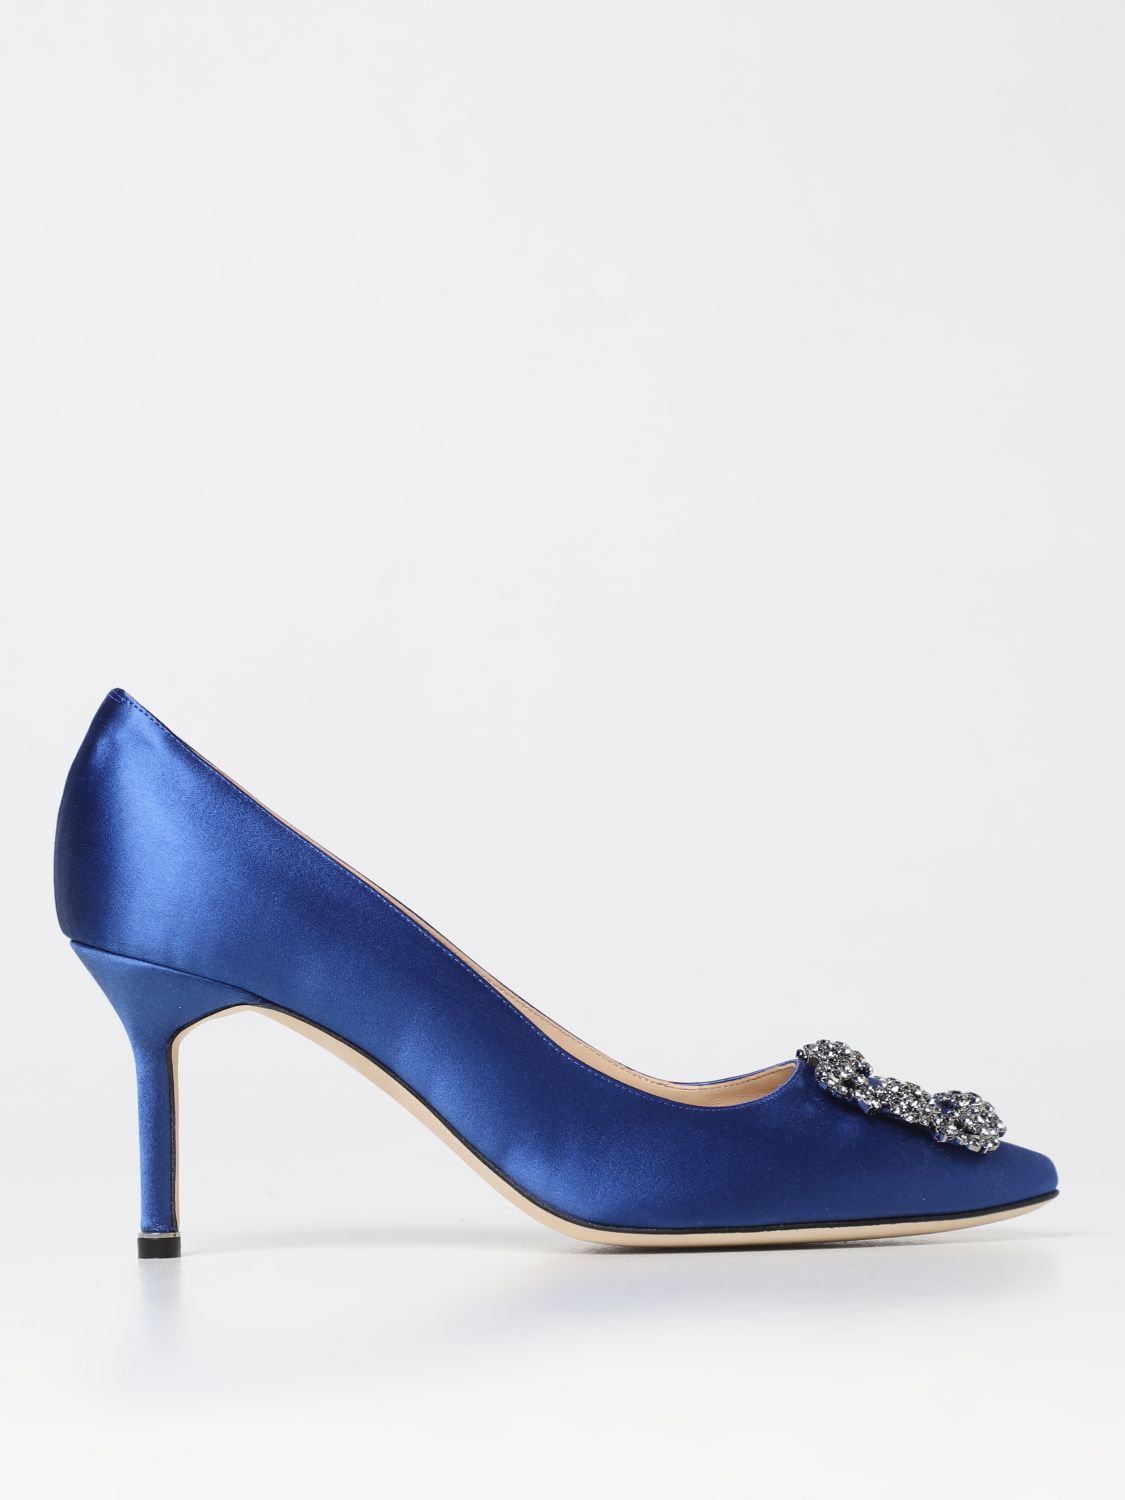 Manolo Blahnik Shoes Woman Color Royal Blue | ModeSens